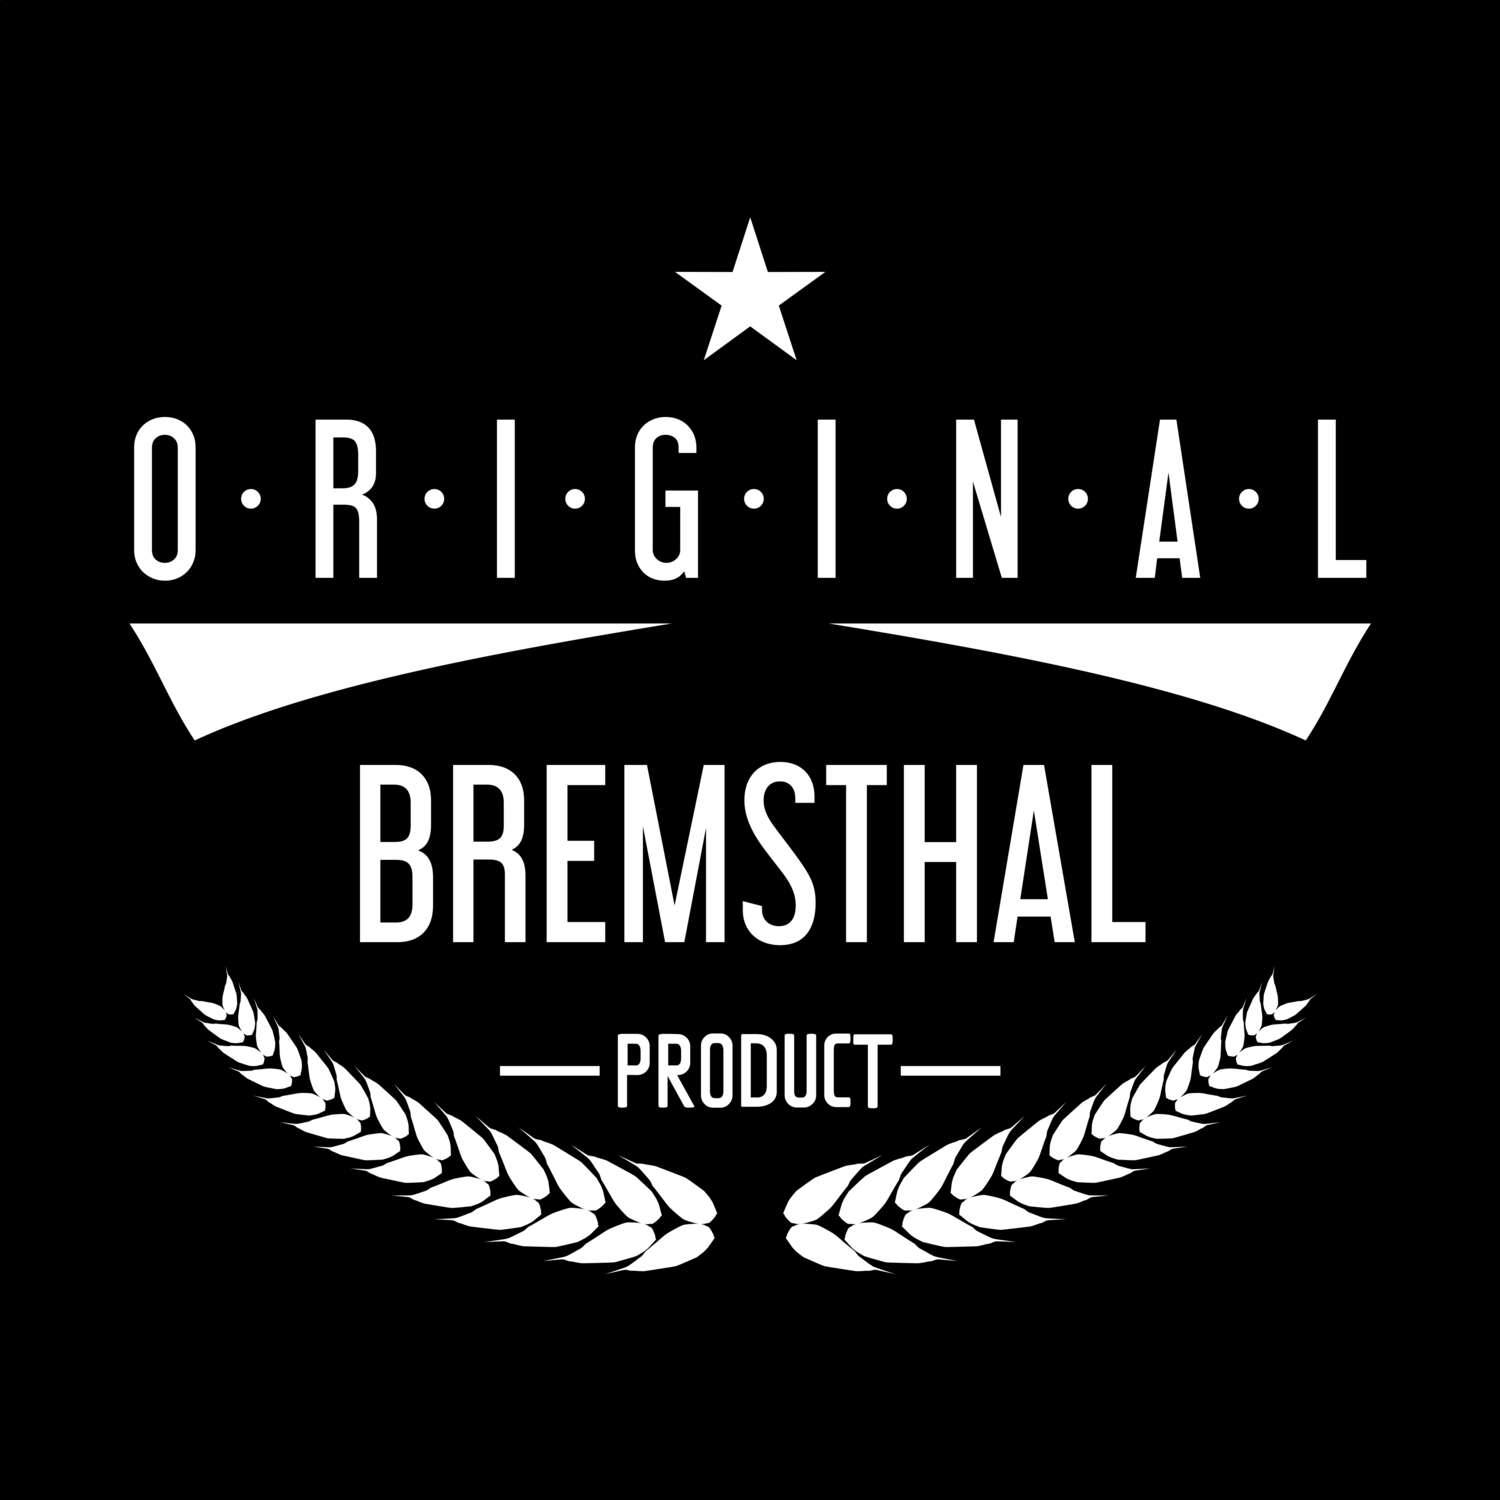 Bremsthal T-Shirt »Original Product«